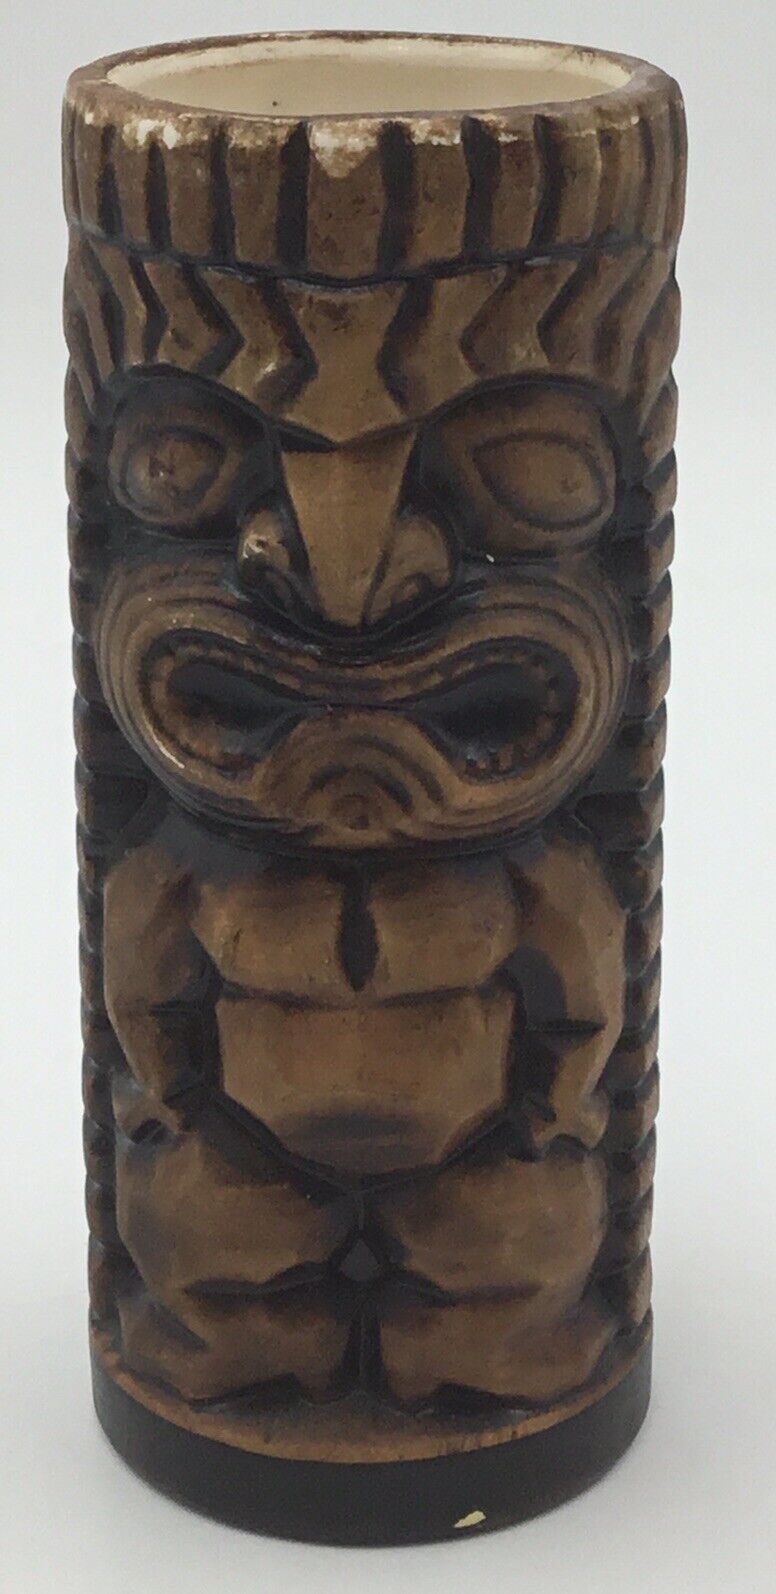 Tiki Mug Florida Brown Totem Pole Mug Ceramic Two Sided